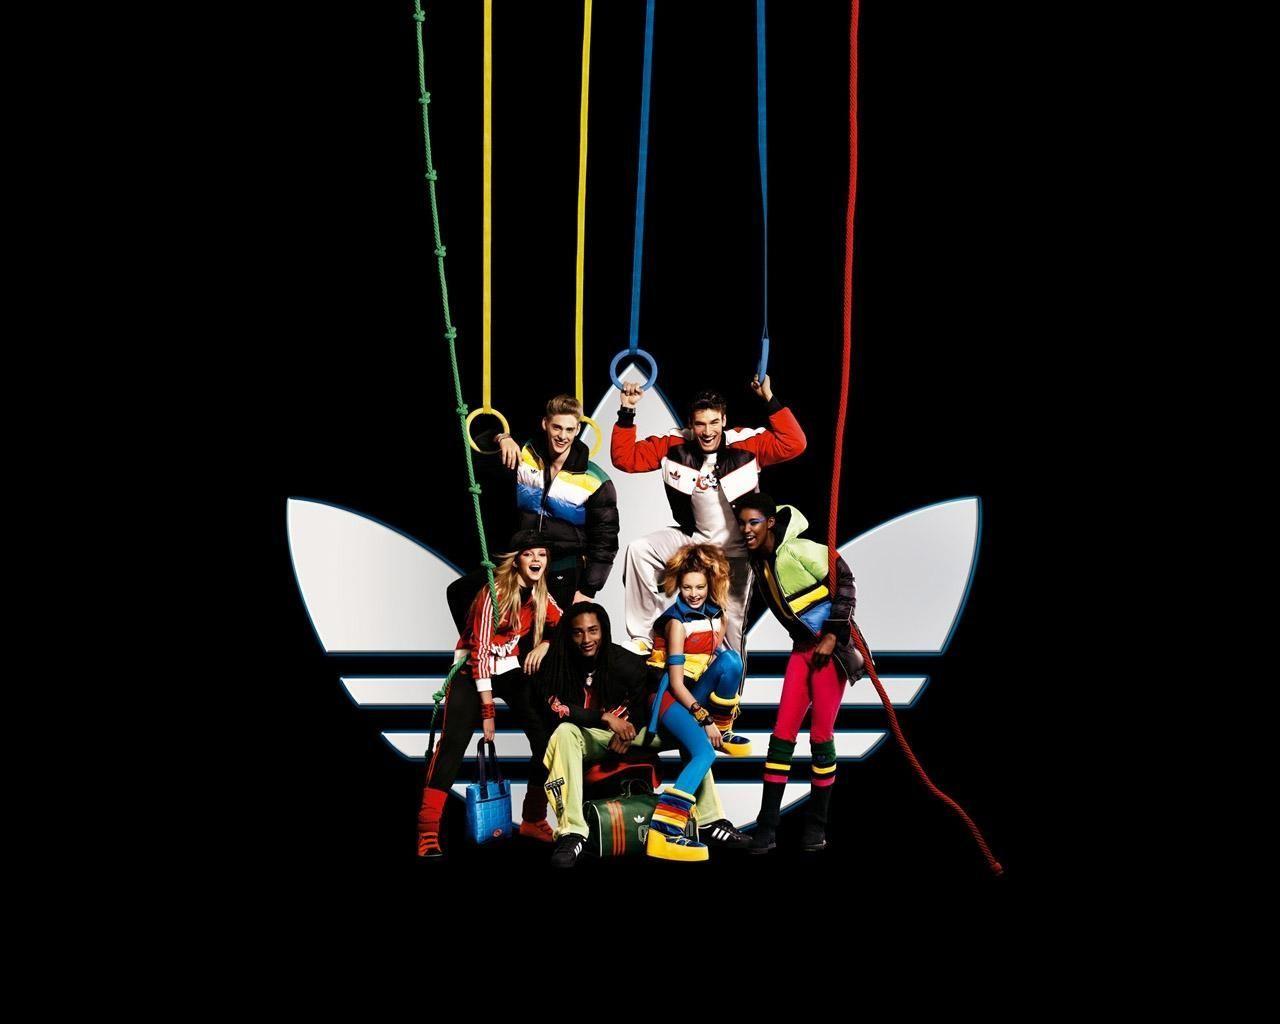 Adidas Logo Wallpaper